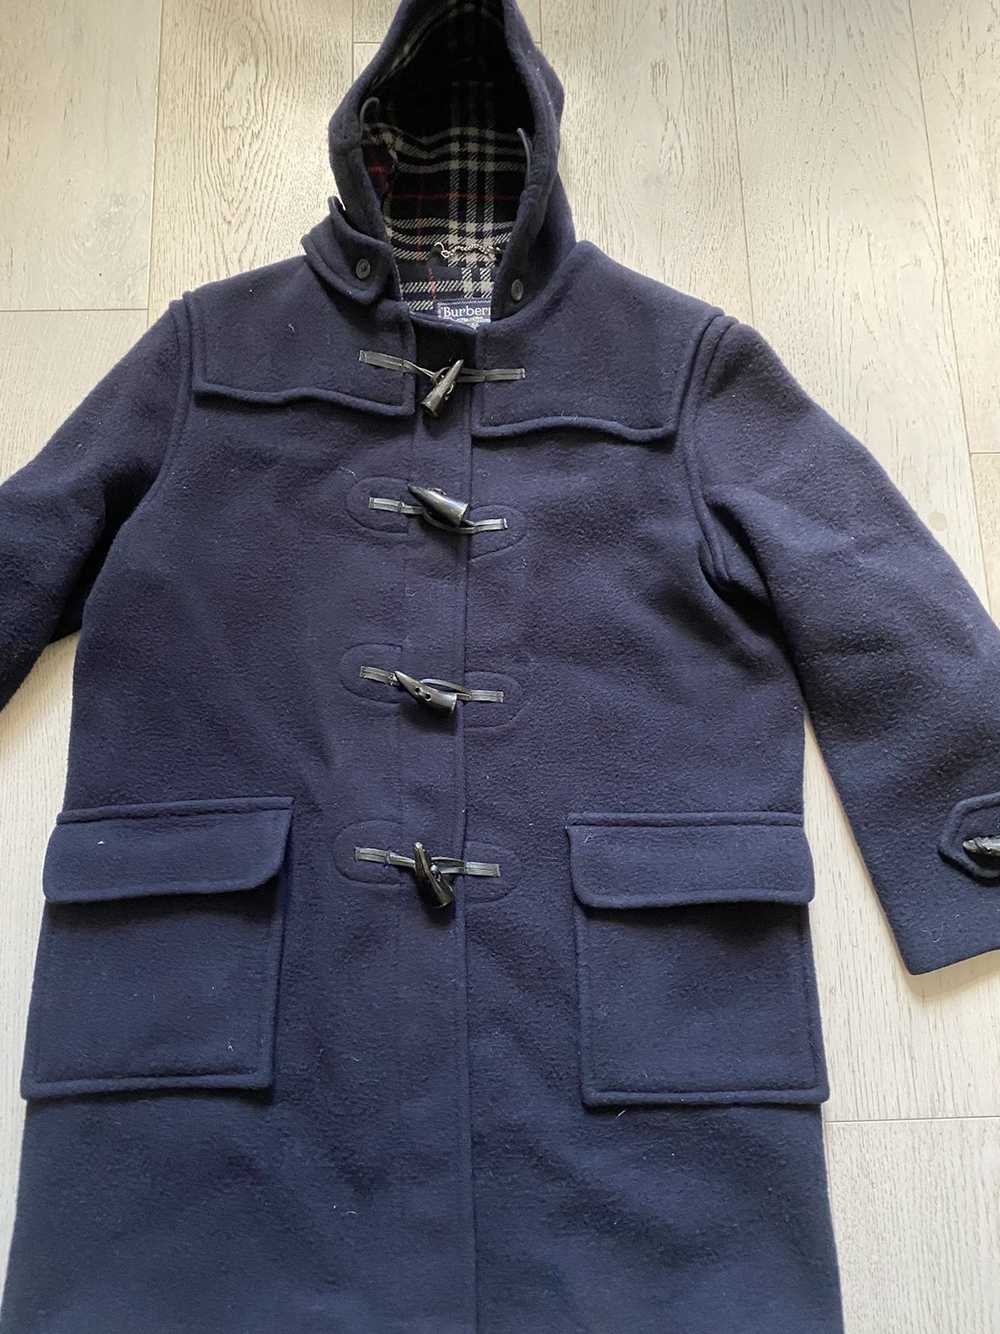 Burberry Vintage Burberrys wool duffel coat - image 2